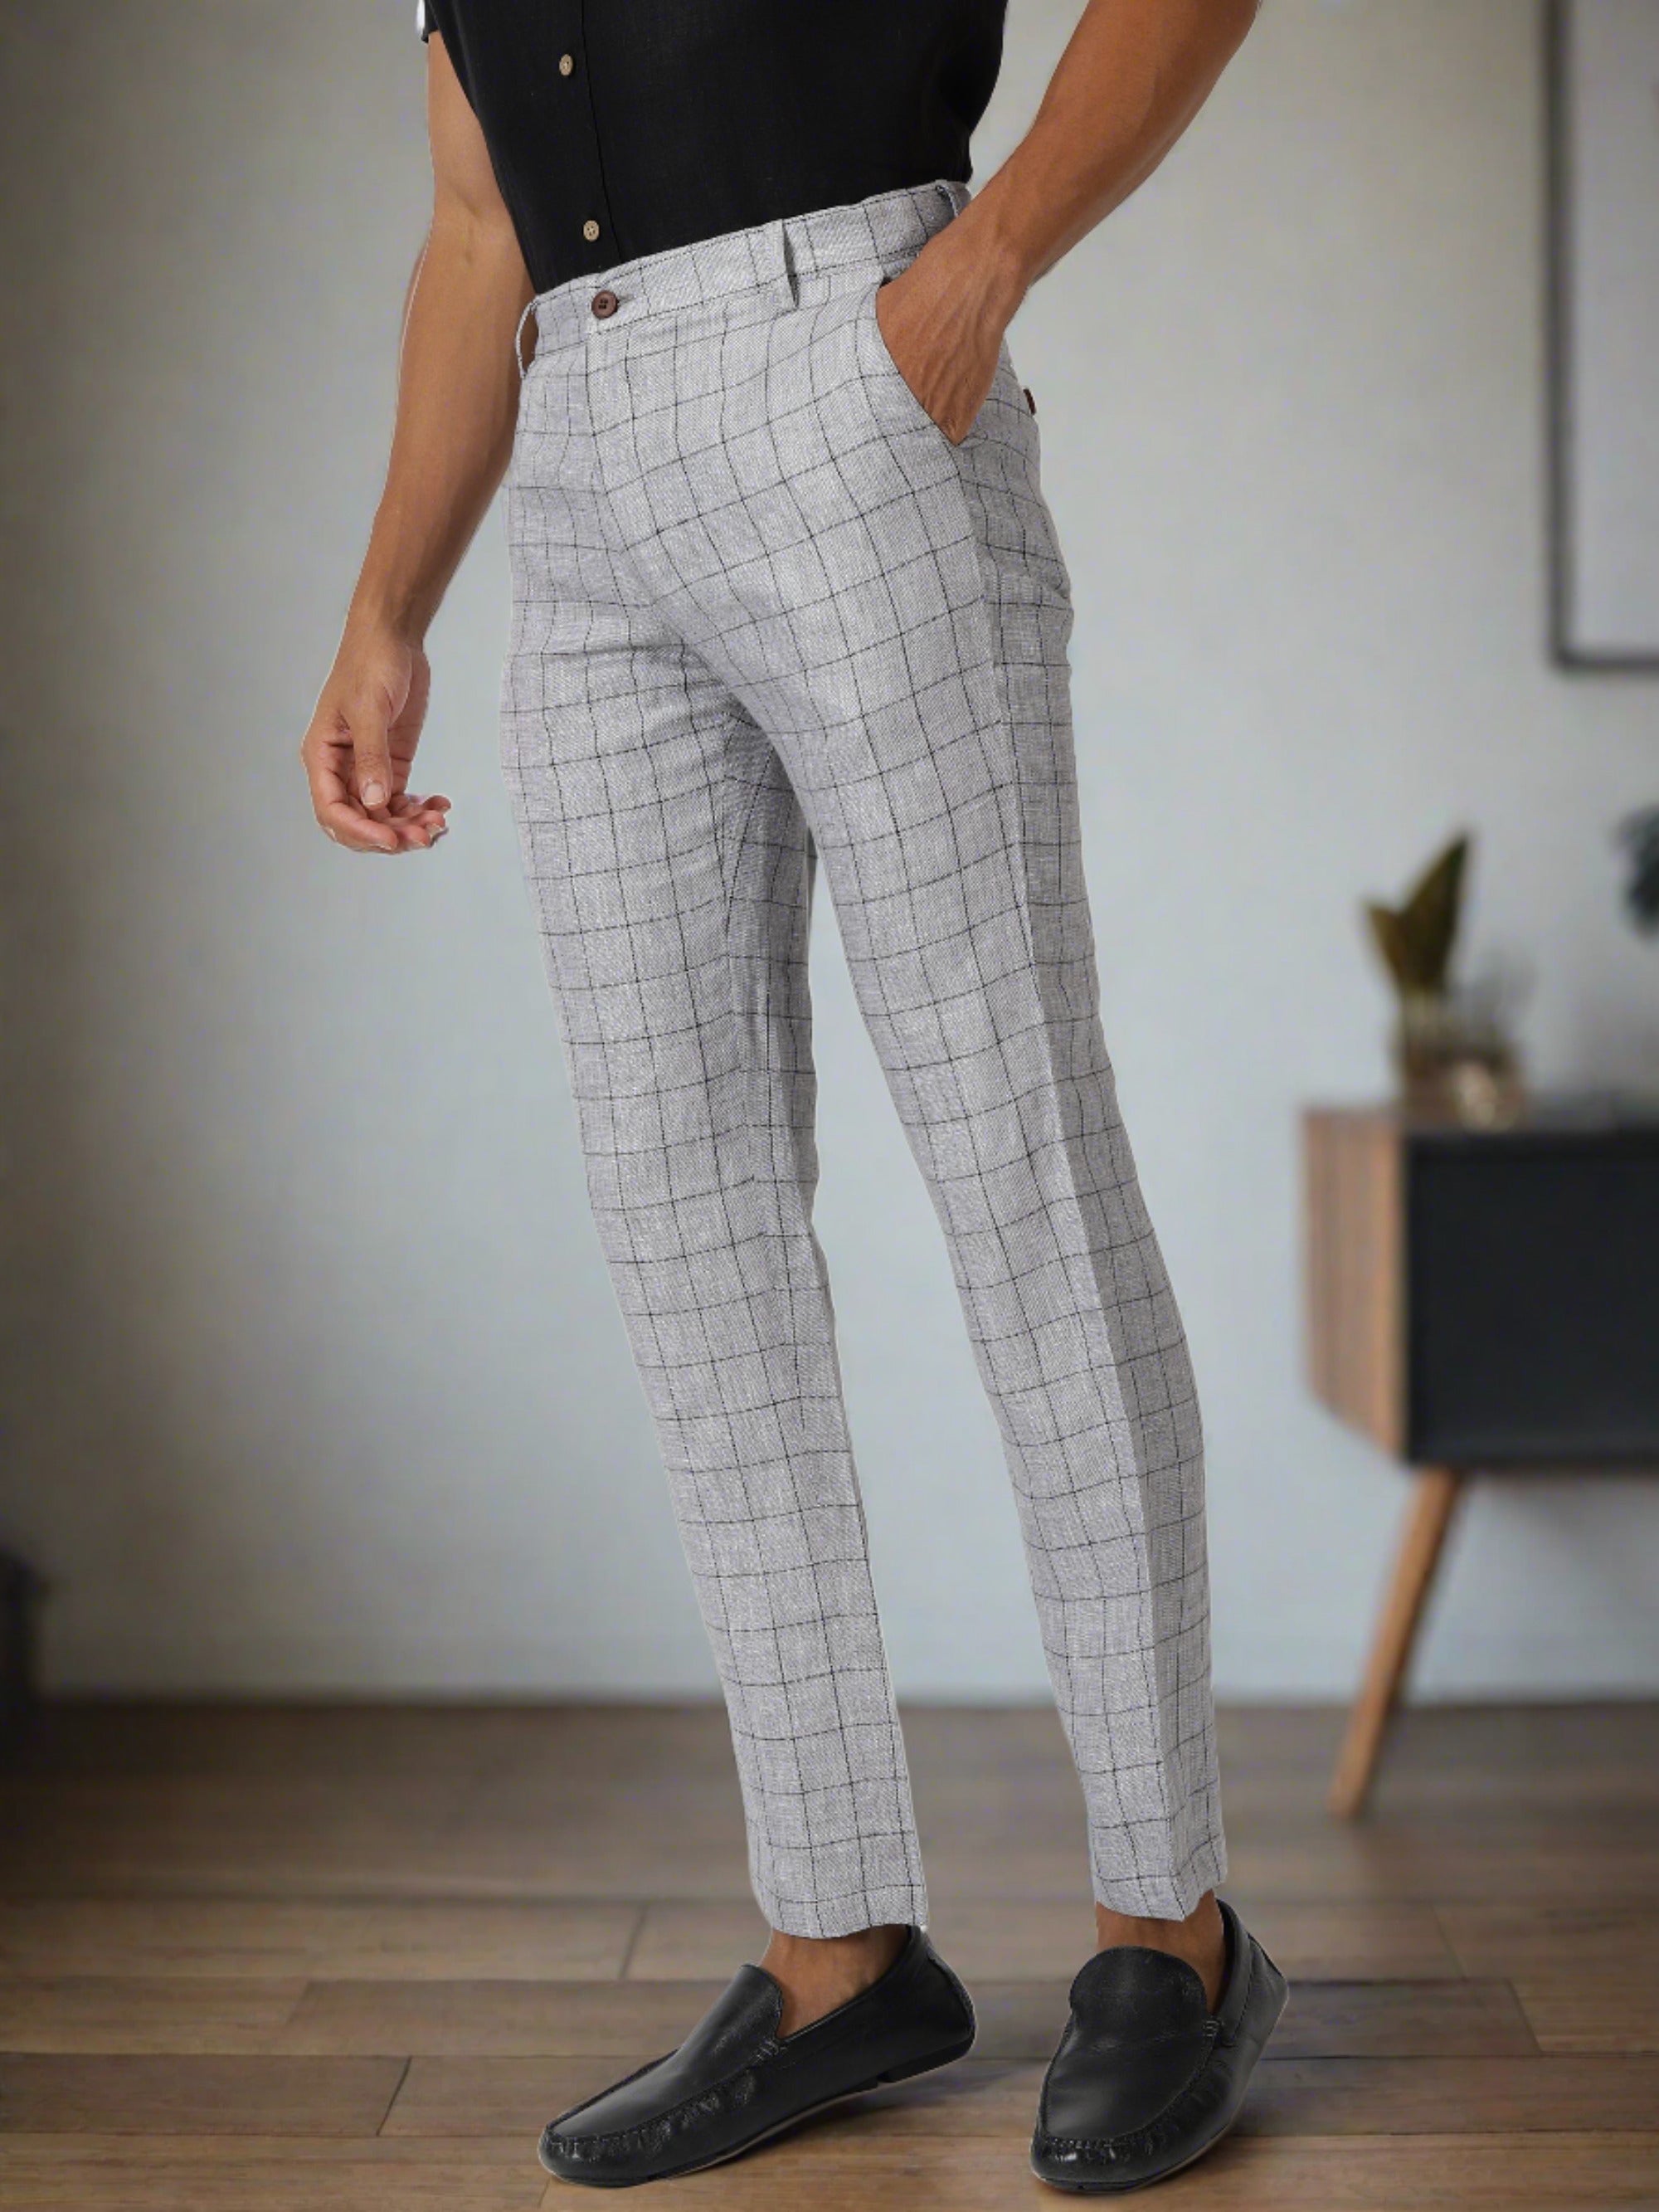 Unique Bargains Formal Plaid Dress Pants for Men's Flat Front Checked  Business Trousers